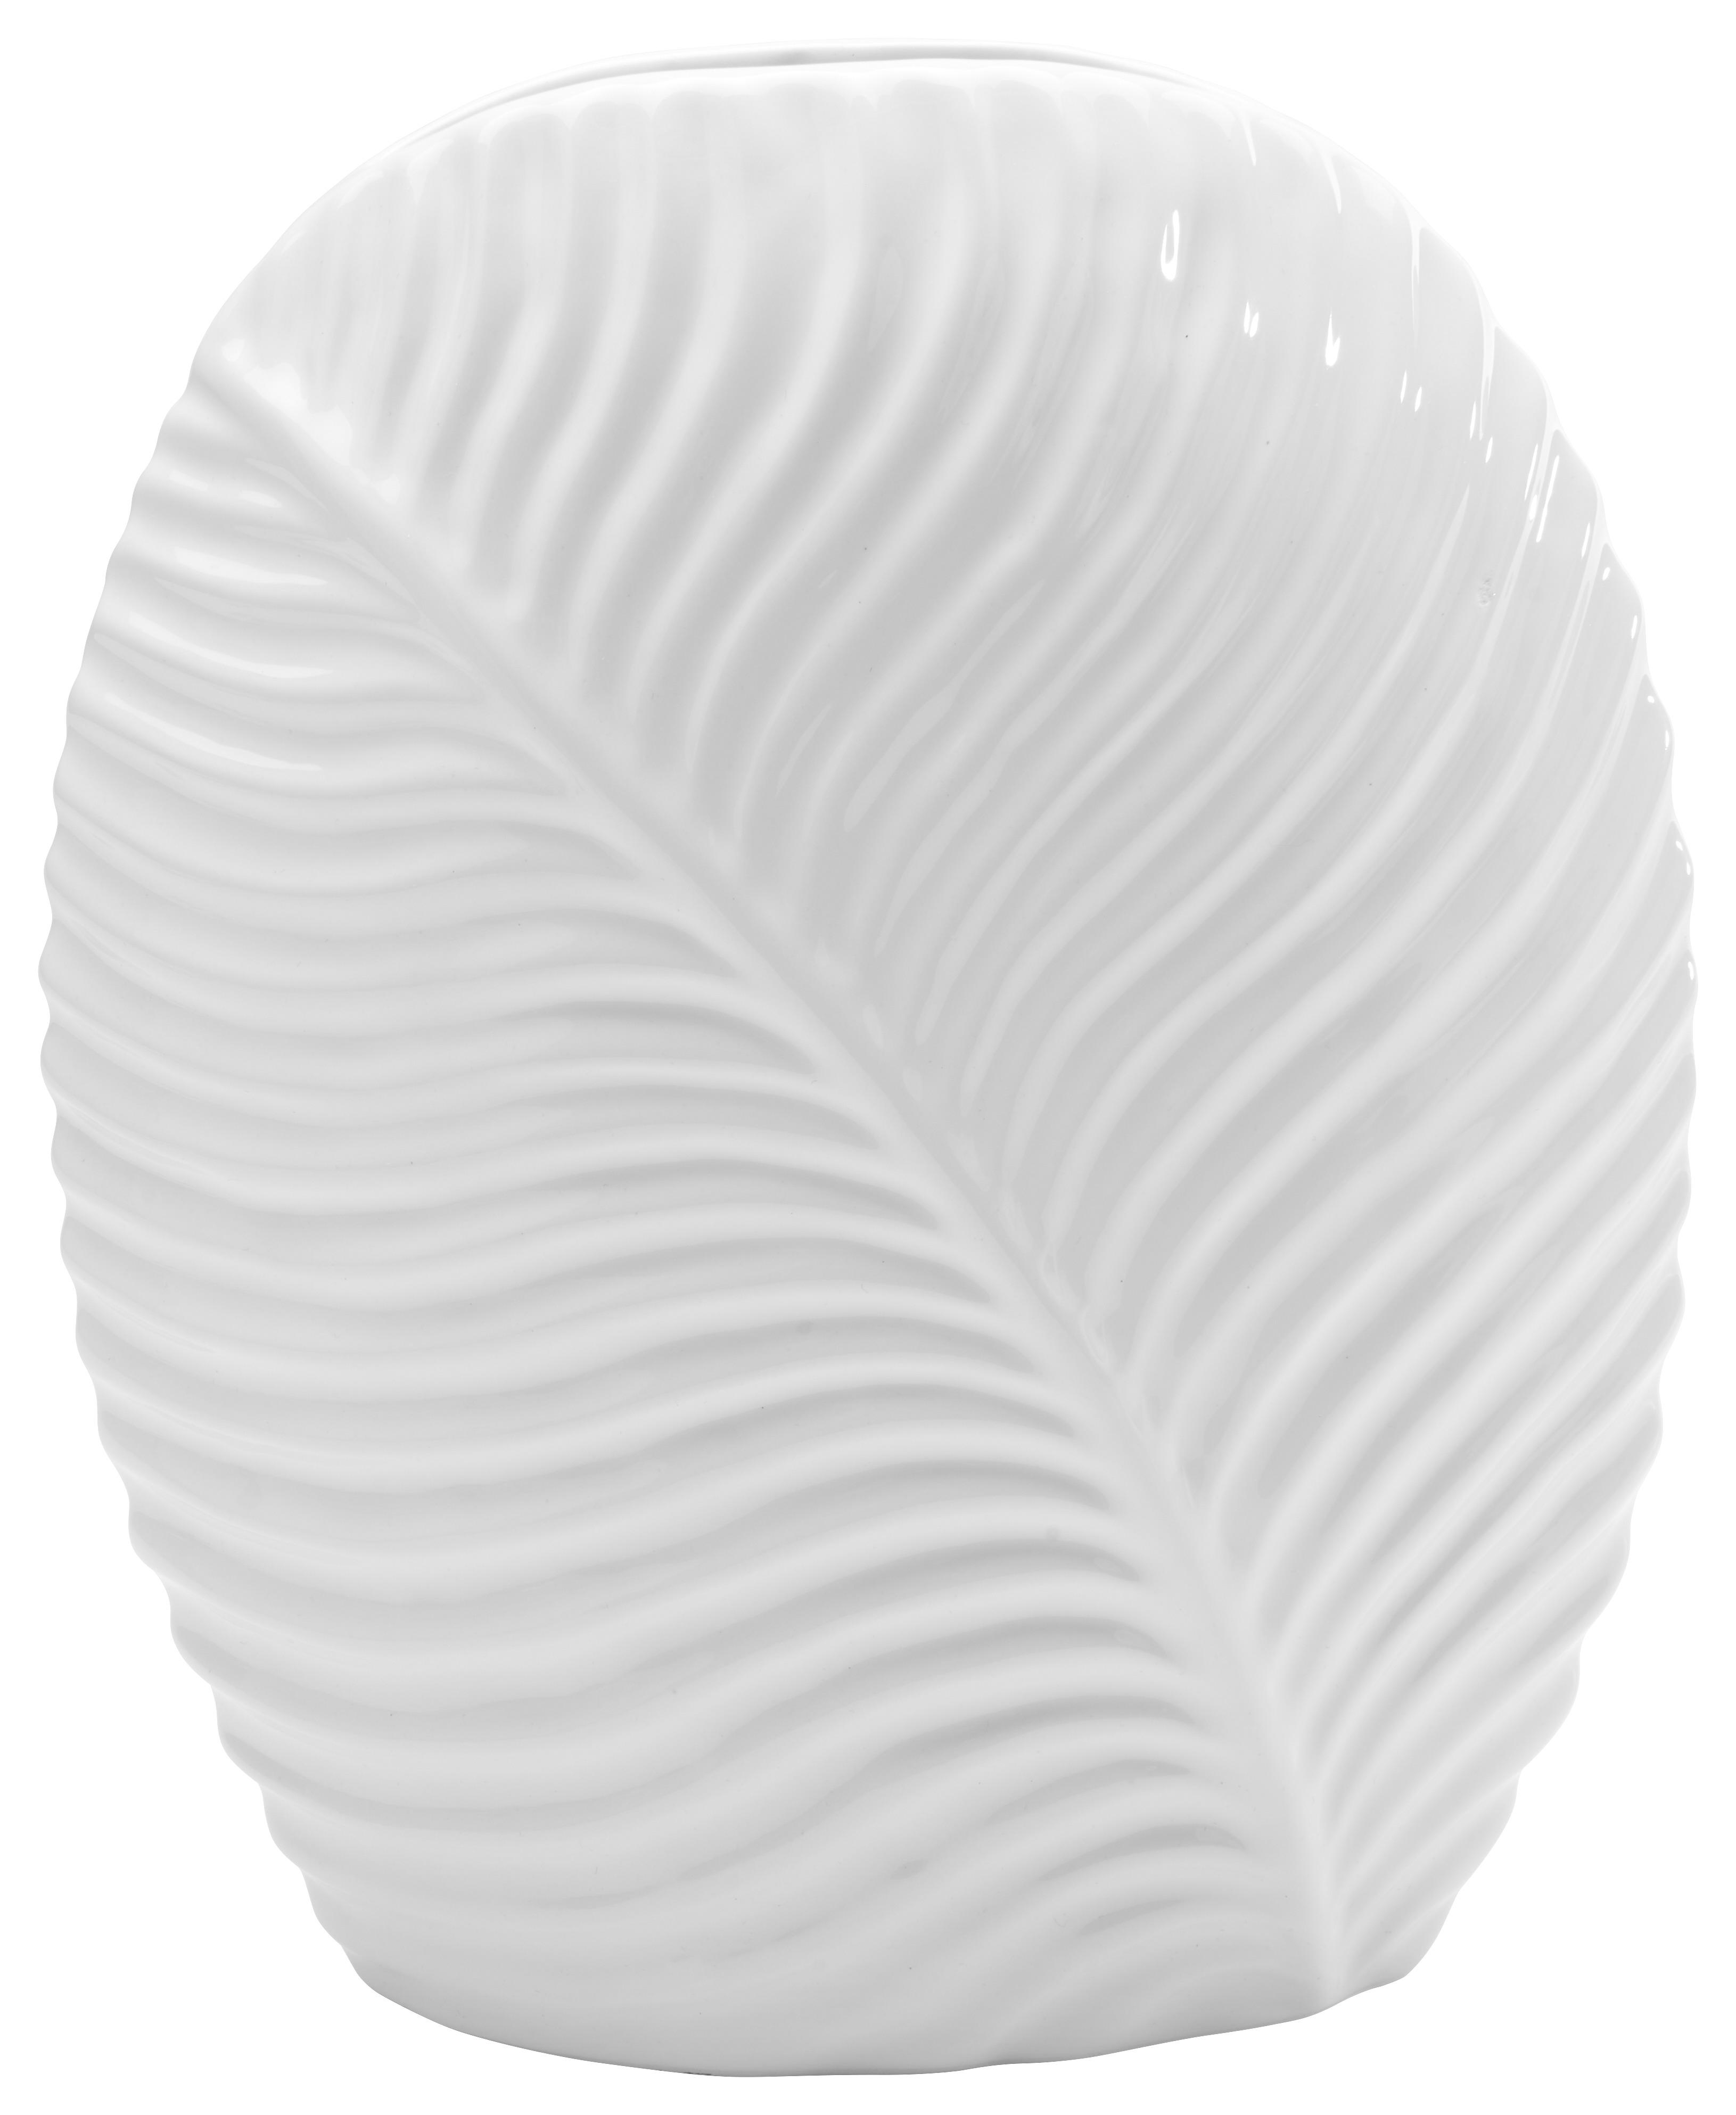 VAZA   20,2/24,2/10,1 cm   keramika  - bijela, Basics, keramika (20,2/24,2/10,1cm) - Ambia Home